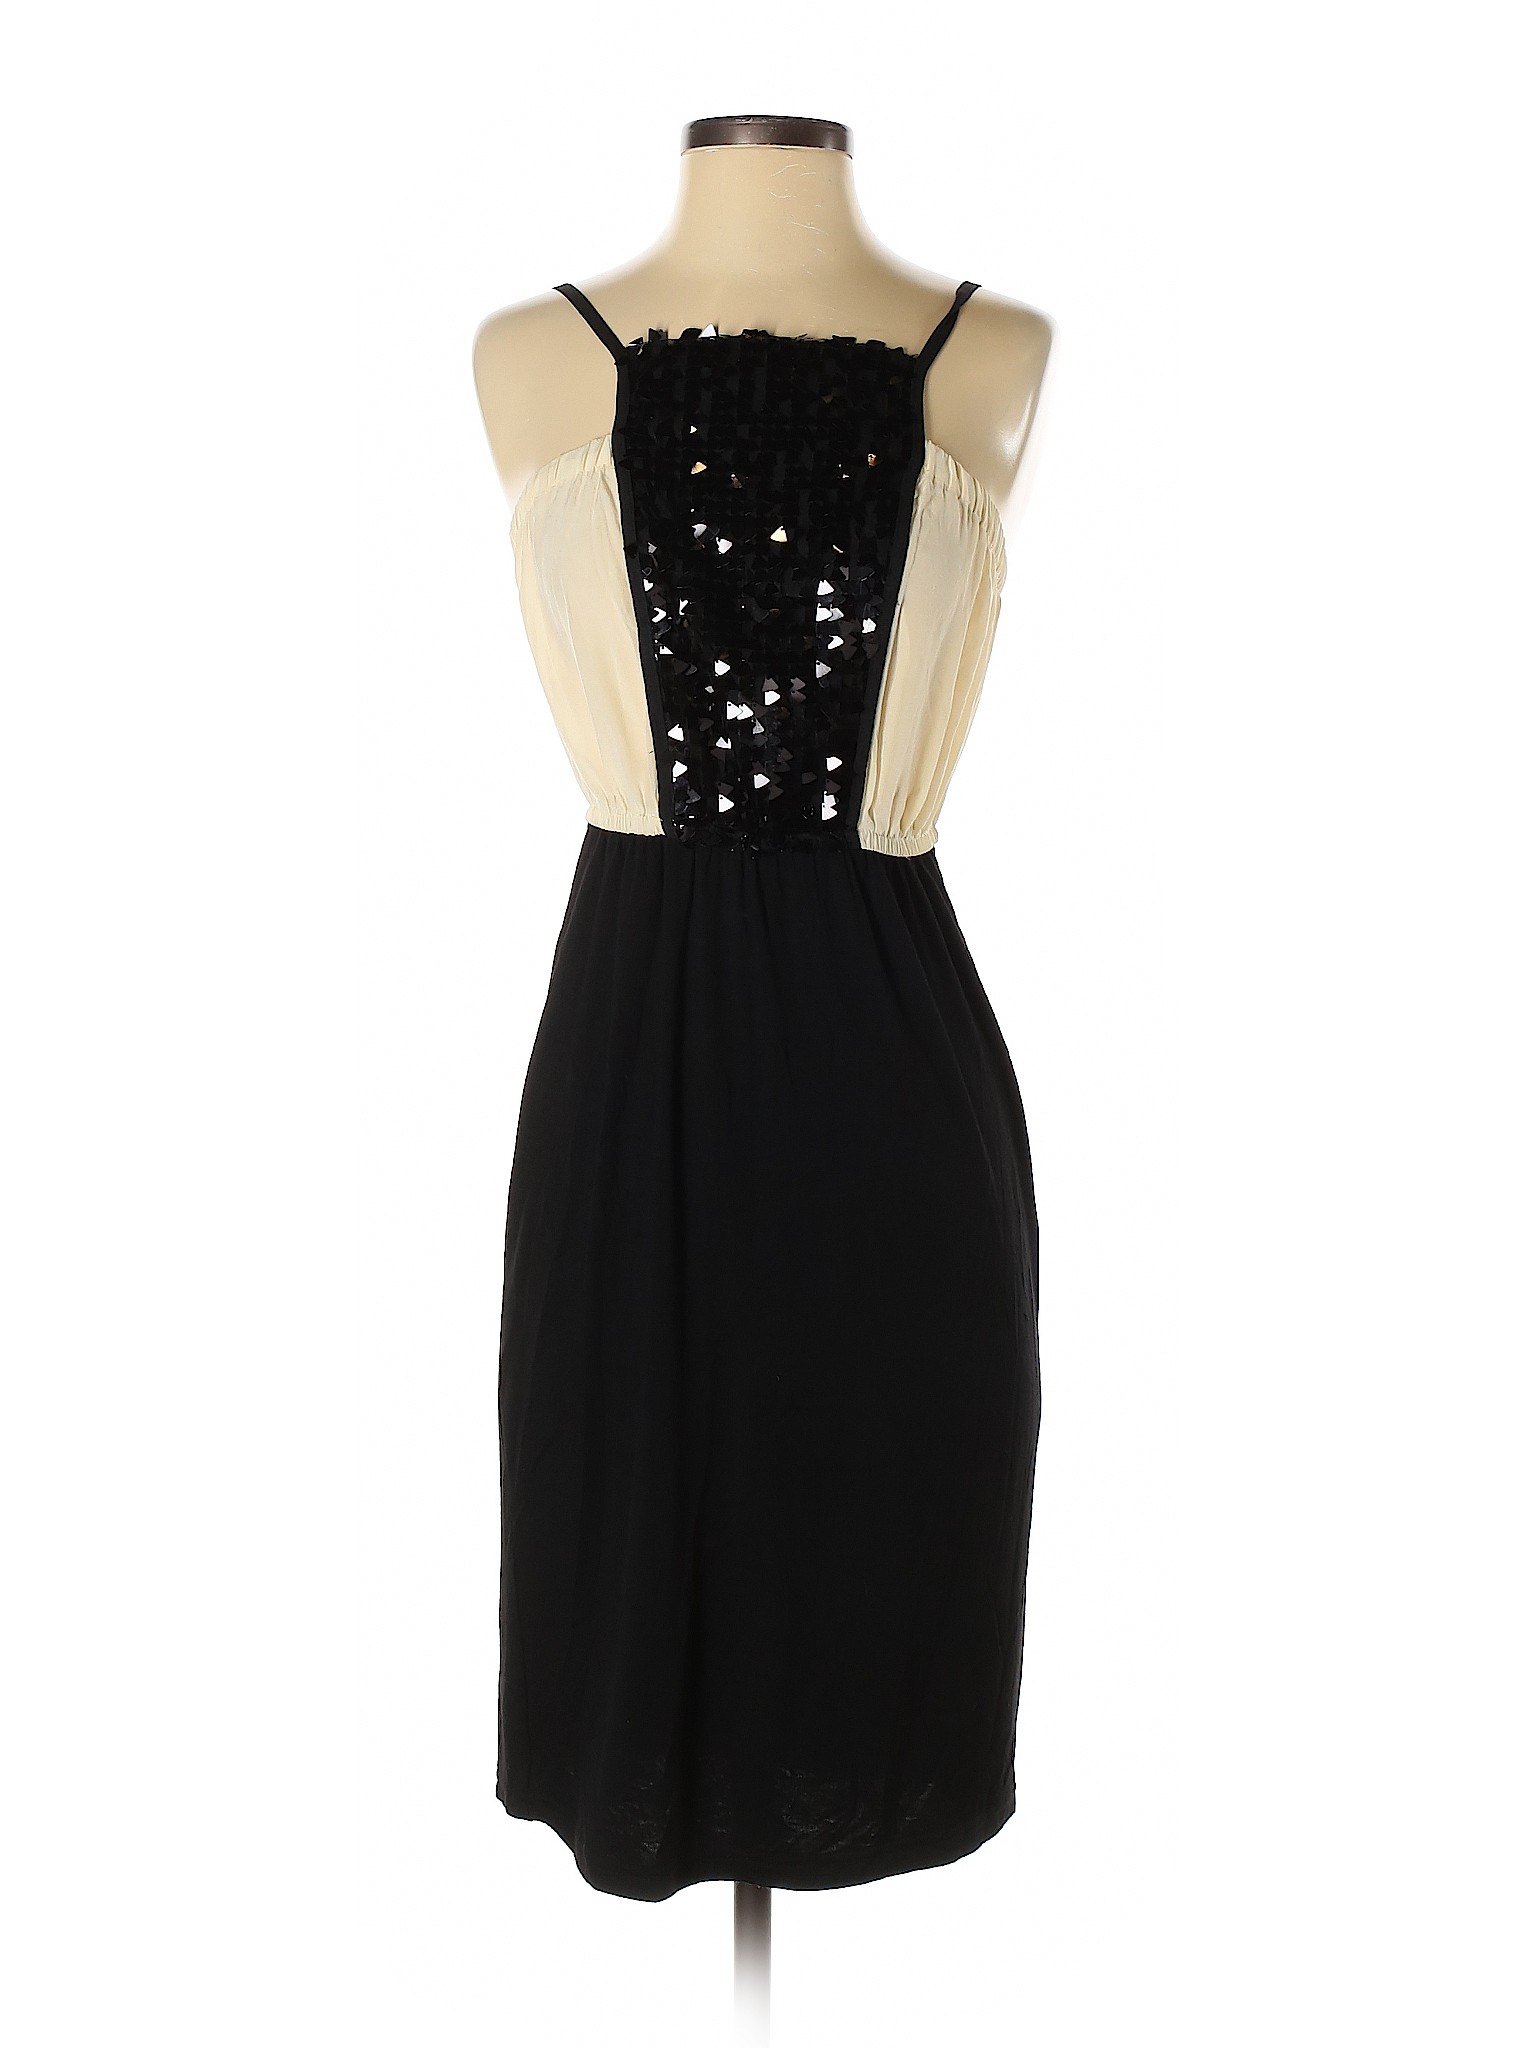 NWT Gianni Bini Women Black Cocktail Dress S | eBay